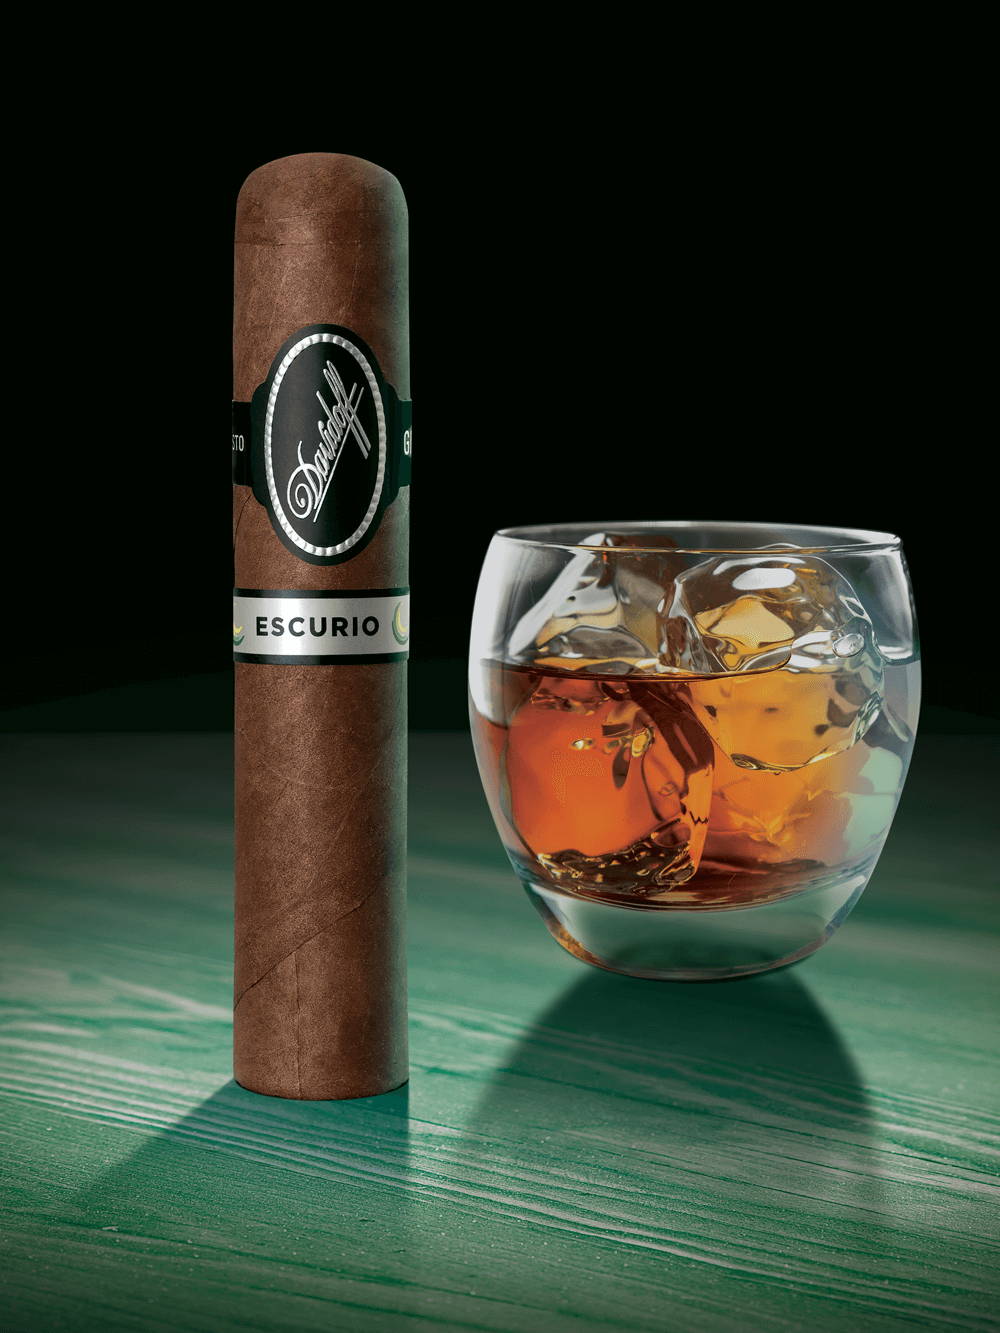 A Davidoff Escurio cigar standing upright next to an alcoholic beverage.